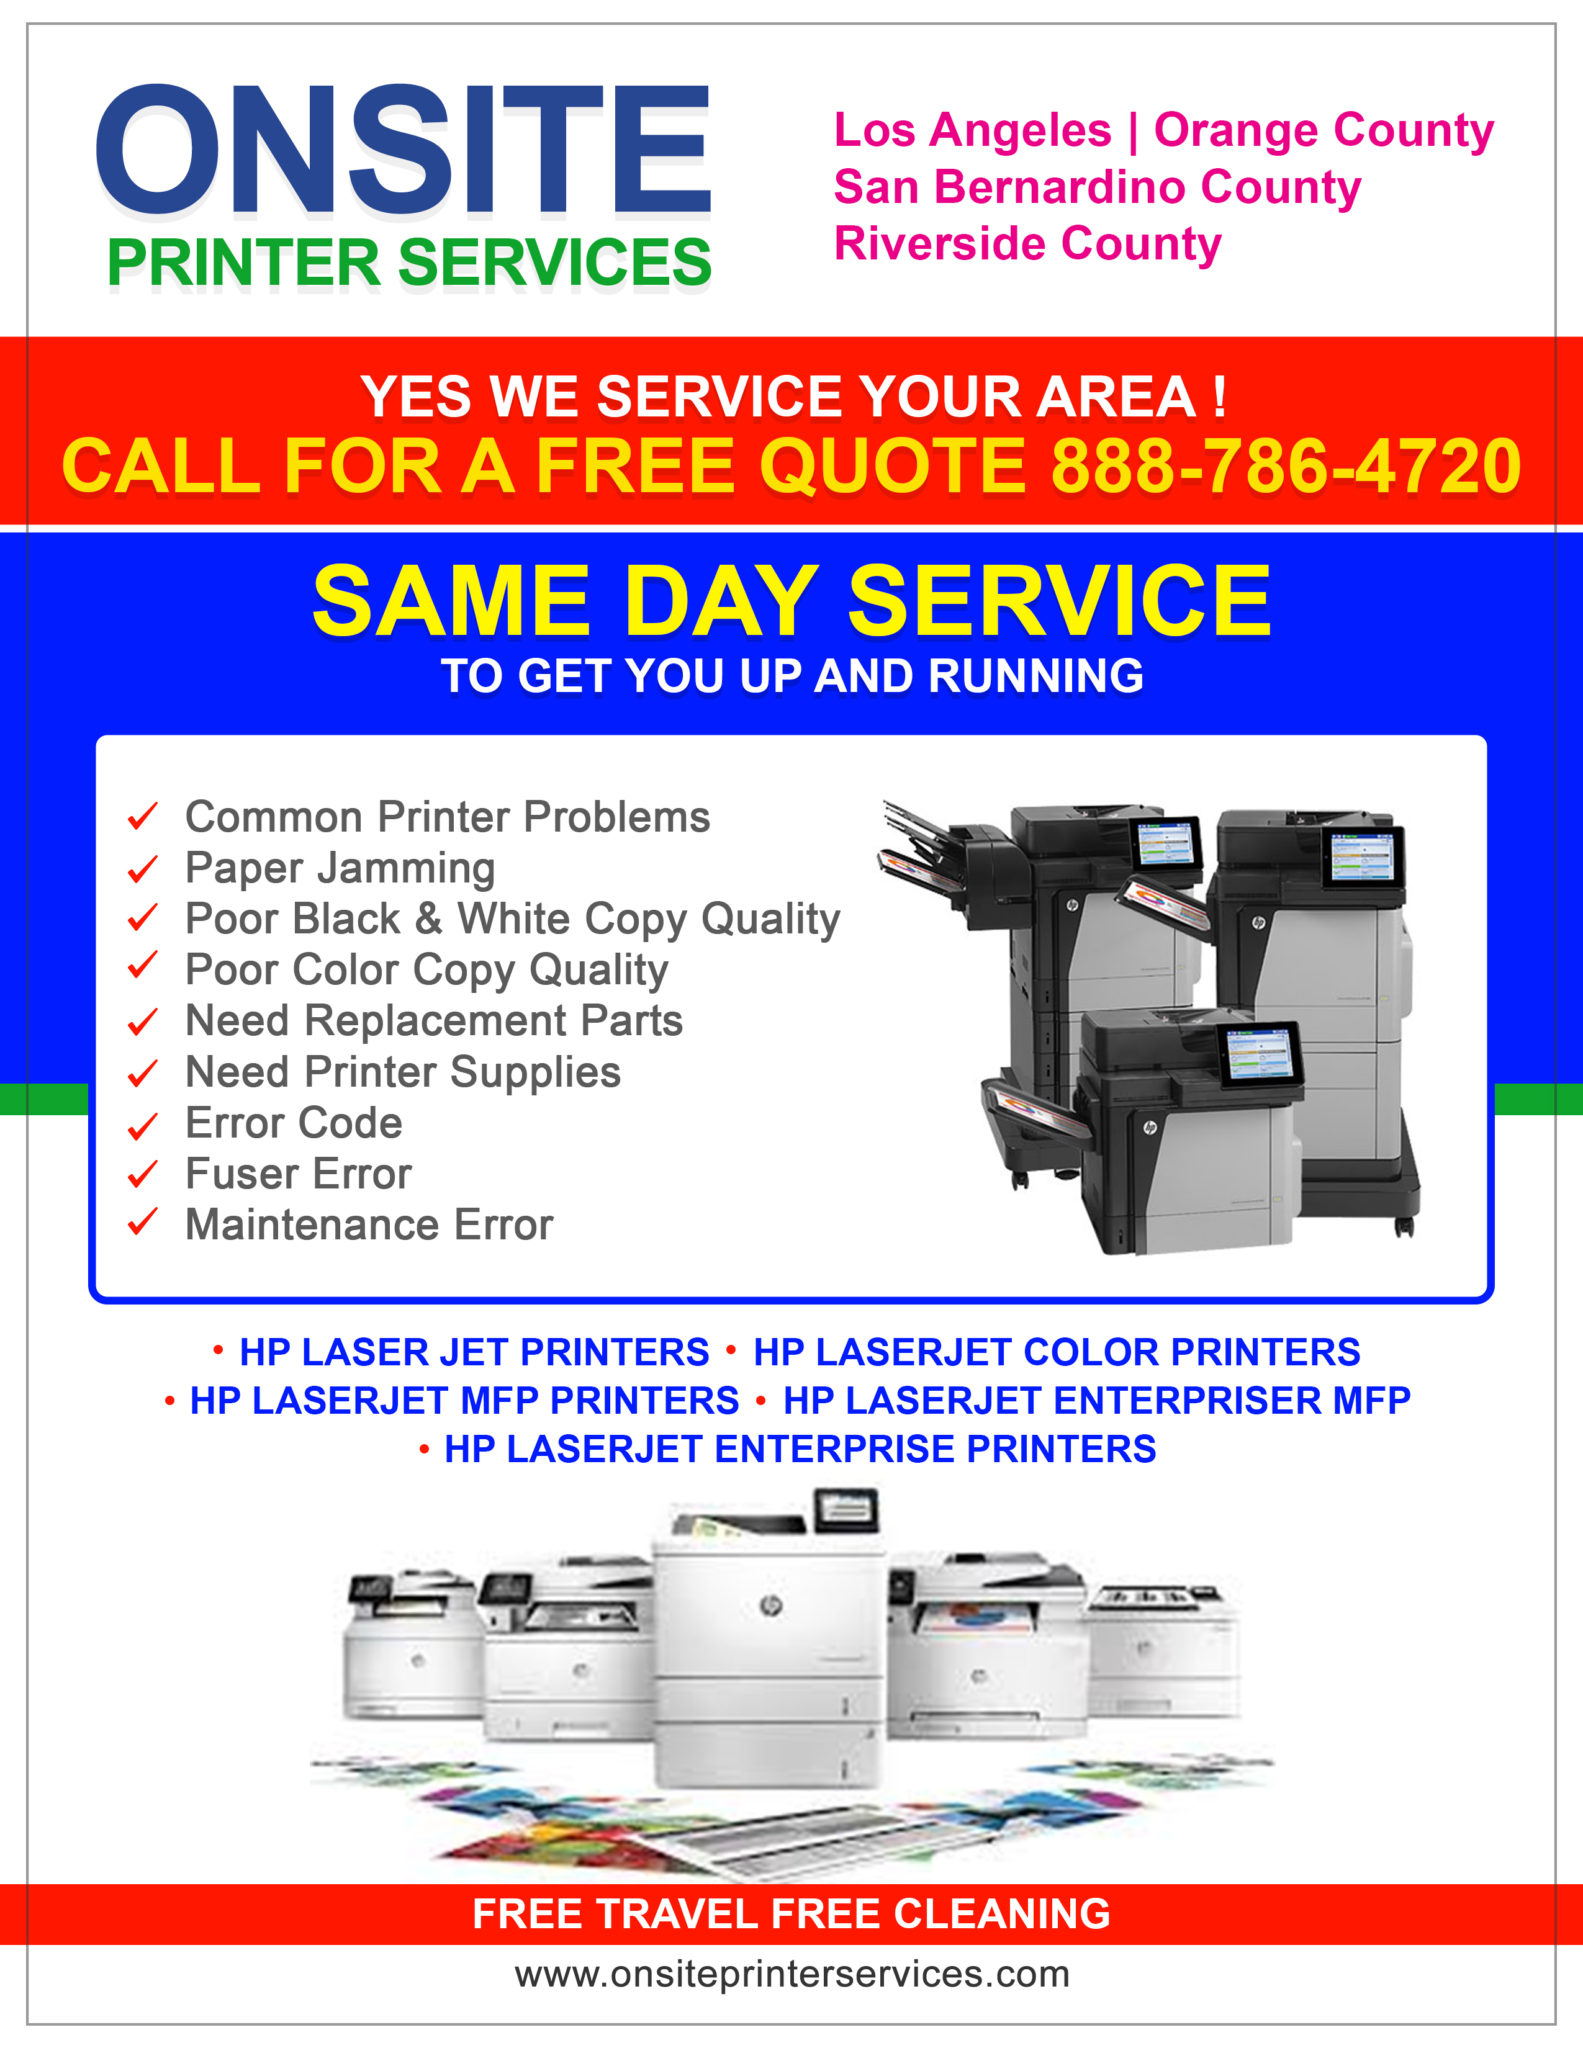 hp-laserjet-printer-repair-near-me-hp-printer-authorized-service